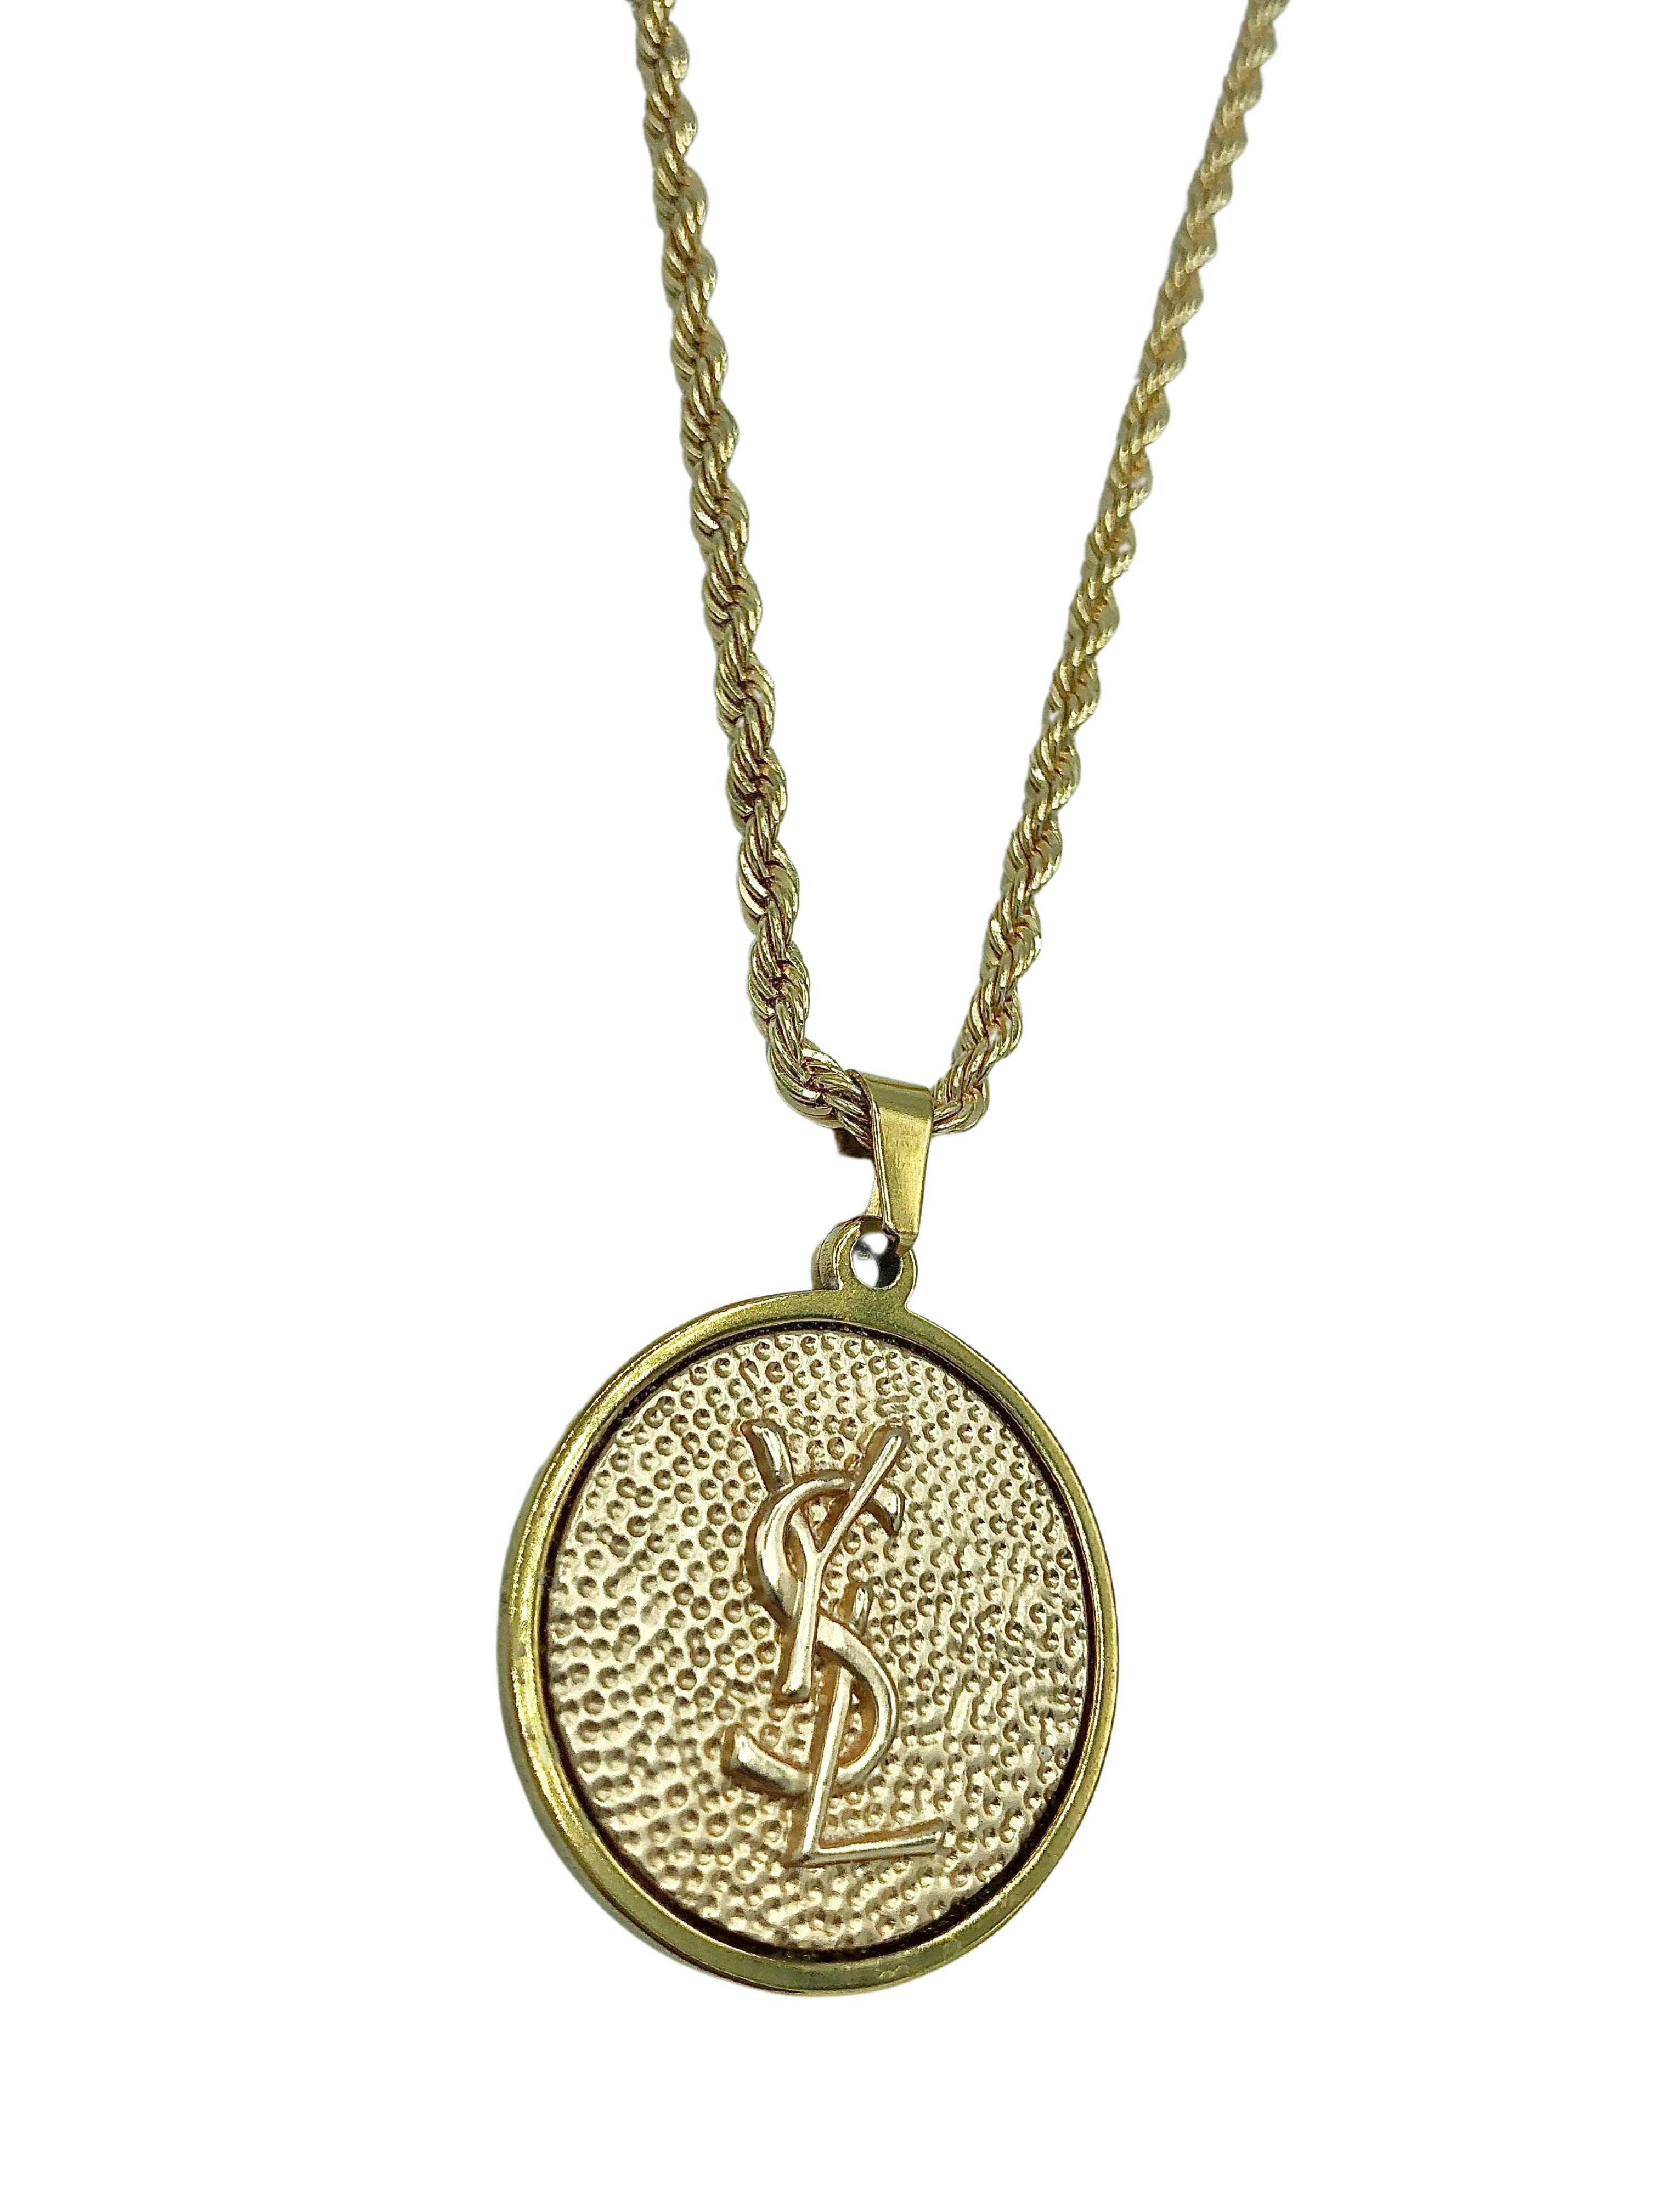 The Thomai Medallion Necklace